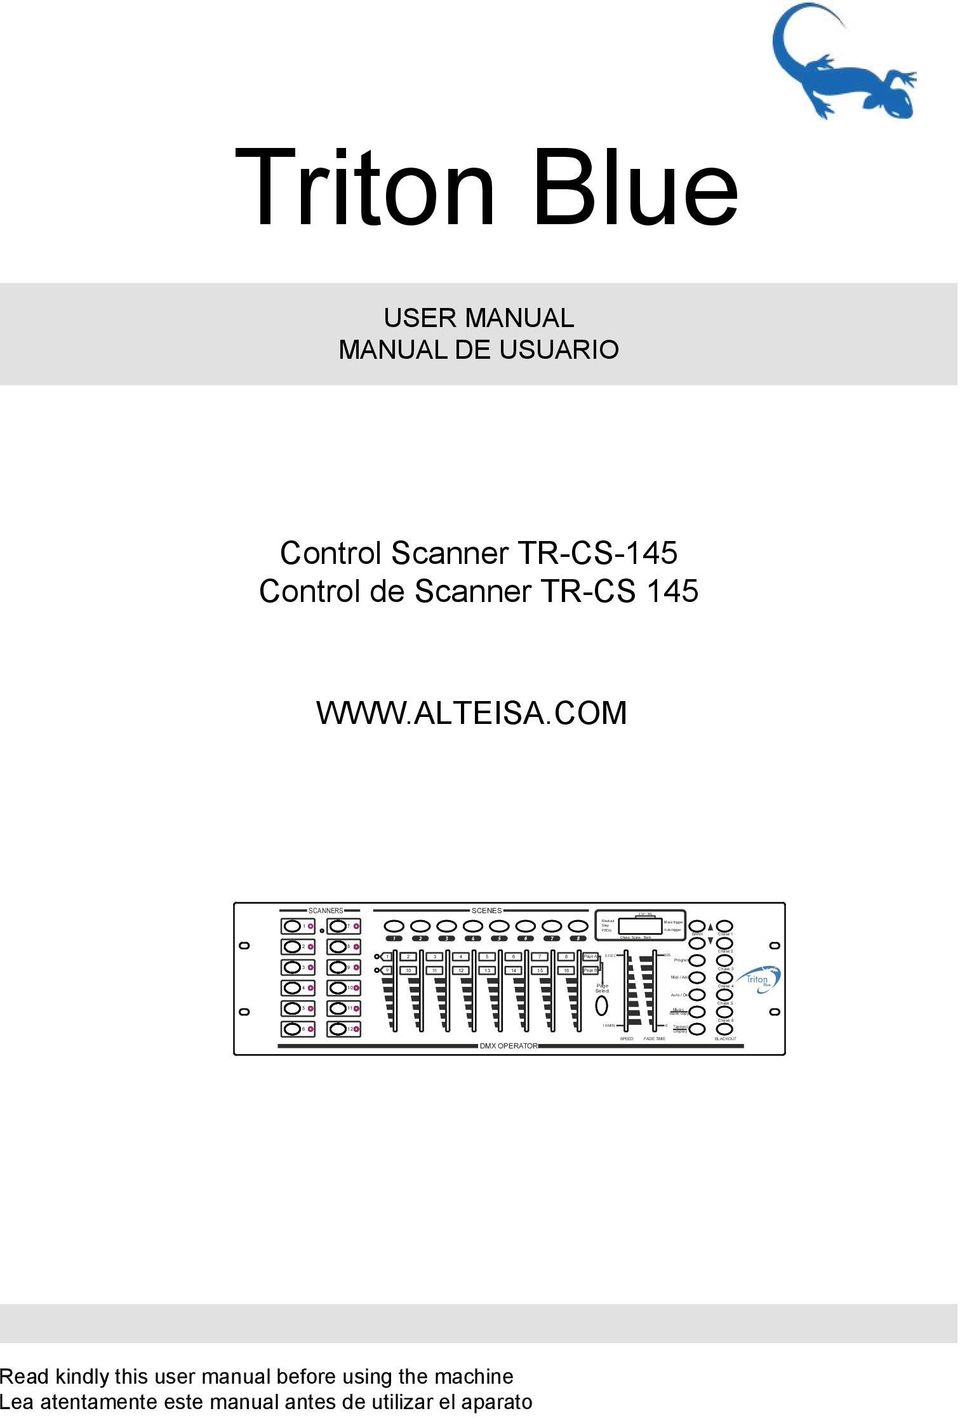 TR-CS-145 Control de Scanner TR-CS 145 SCANNERS SCENES 1 7 2 8 1 2 3 4 5 6 7 8 3 9 10 11 12 13 14 15 16 Page B 4 10 Page Select 5 11